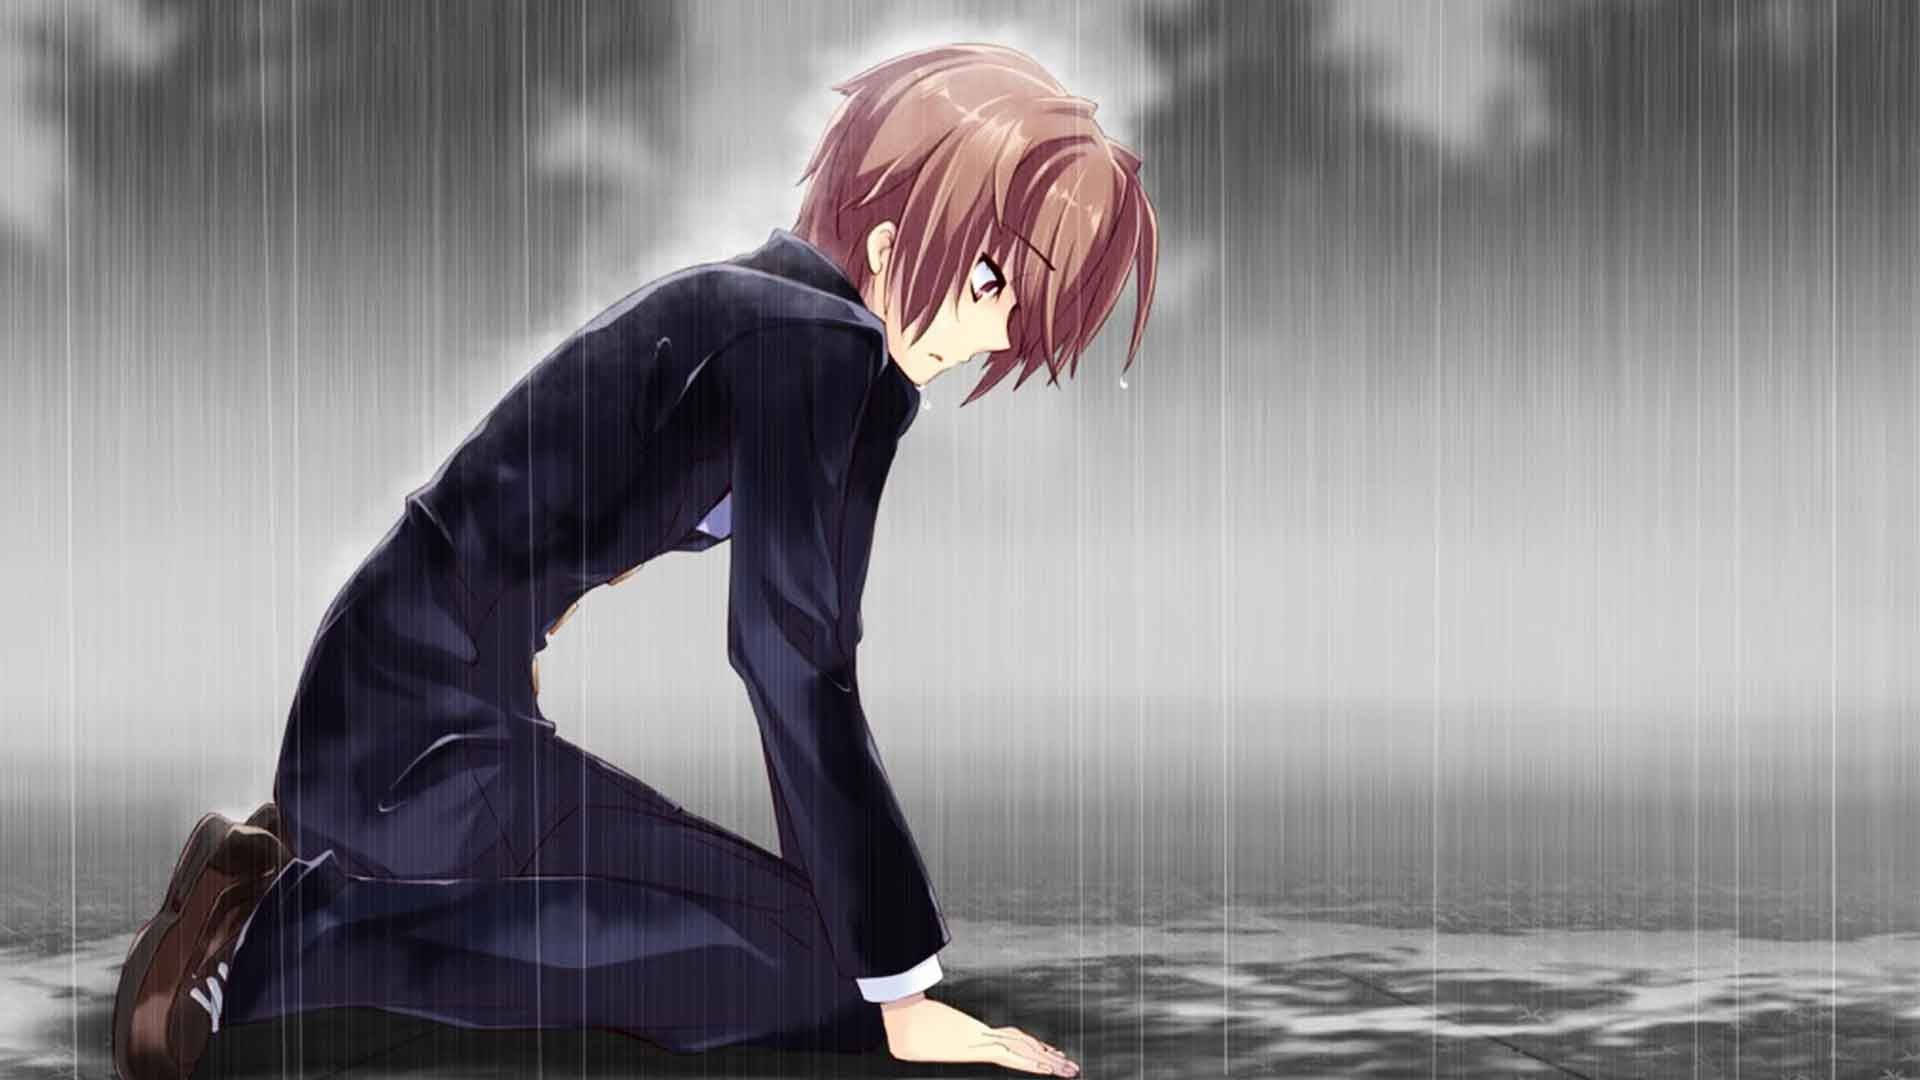 In The Rain Anime Boy Sad Aesthetic Wallpaper